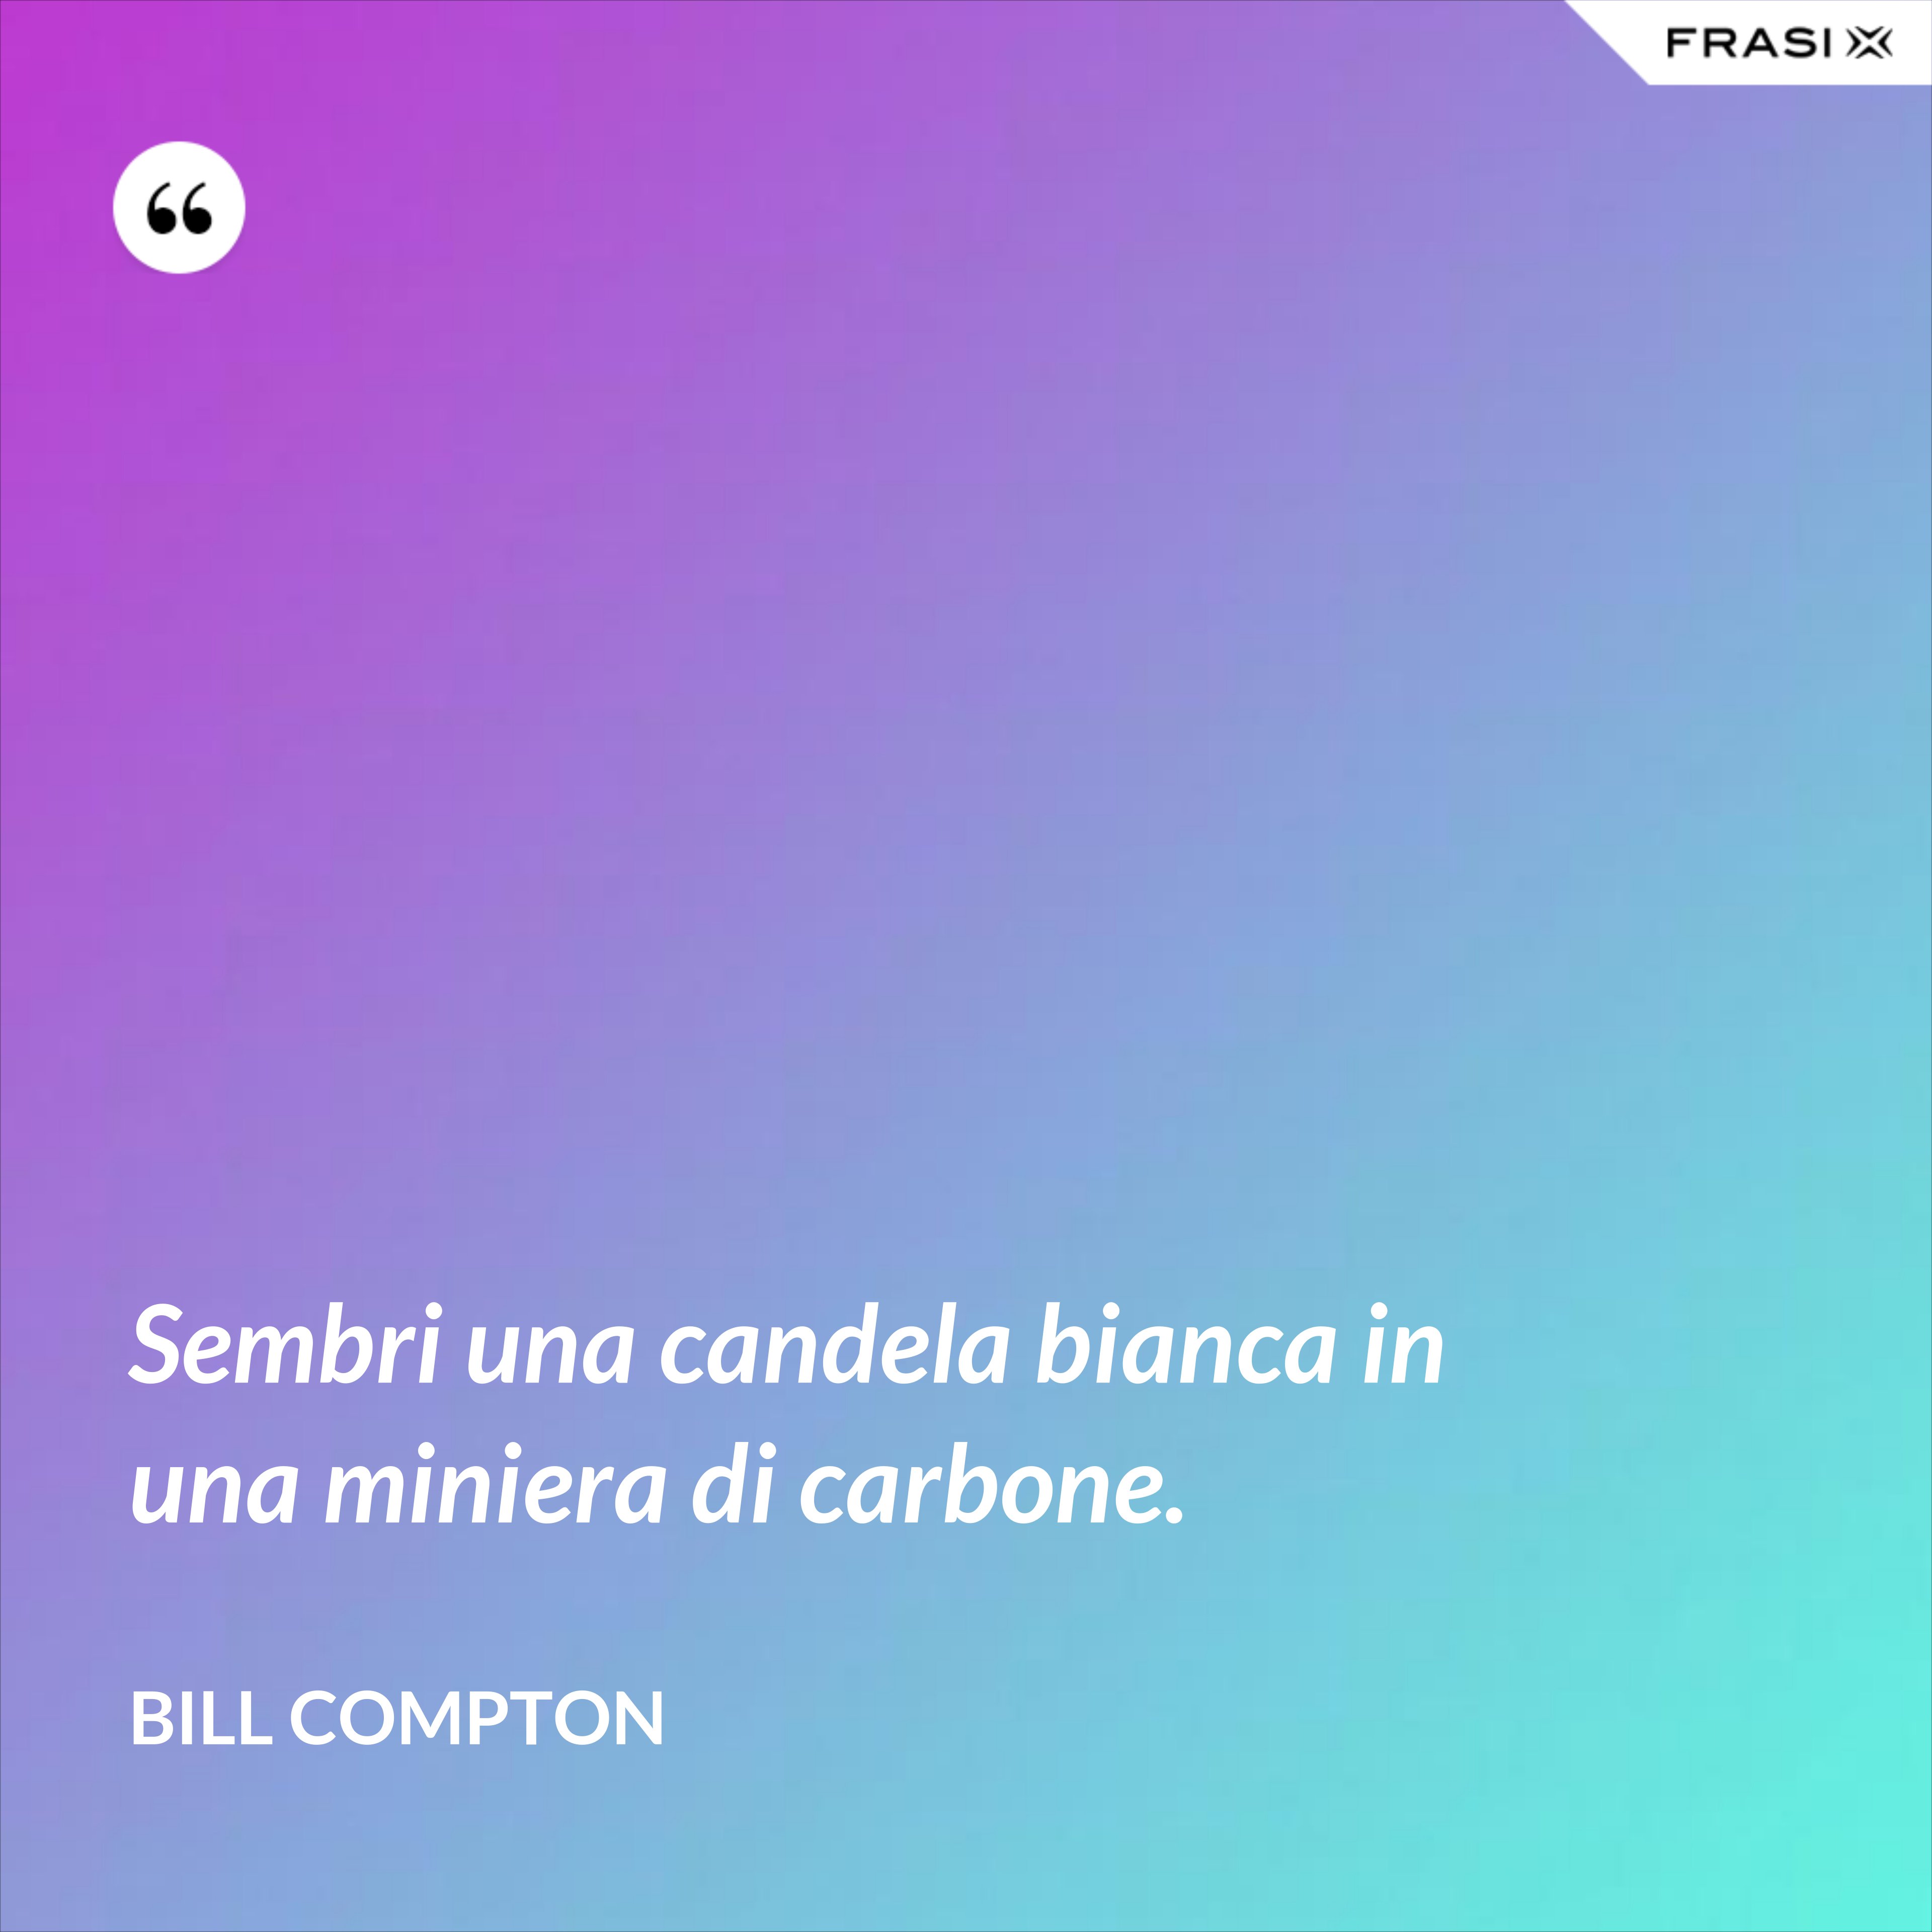 Sembri una candela bianca in una miniera di carbone. - Bill Compton